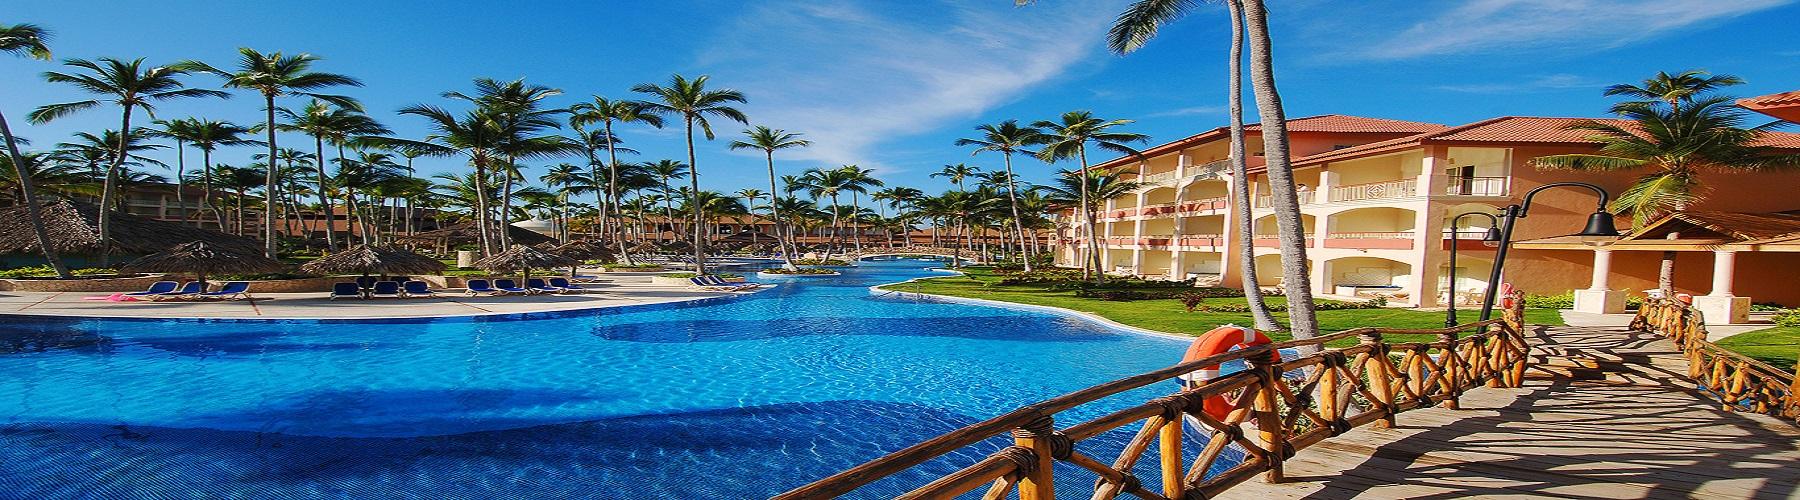 Отель Majestic Colonial Punta Cana 5*